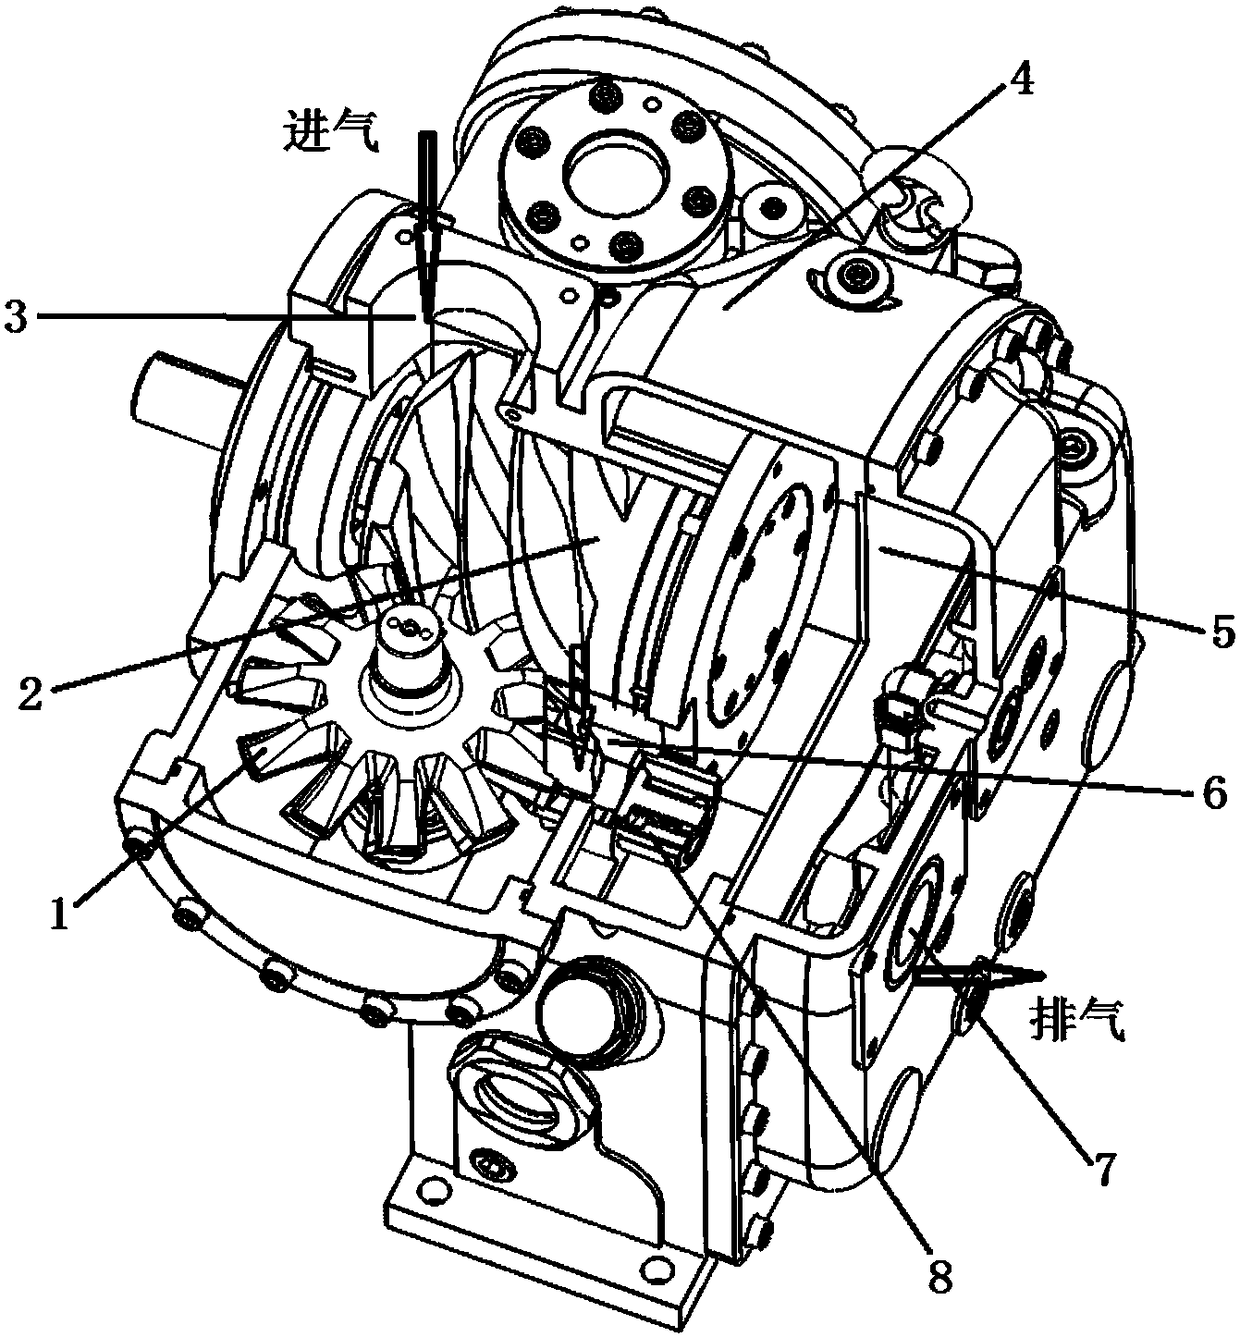 Movable type single screw compressor